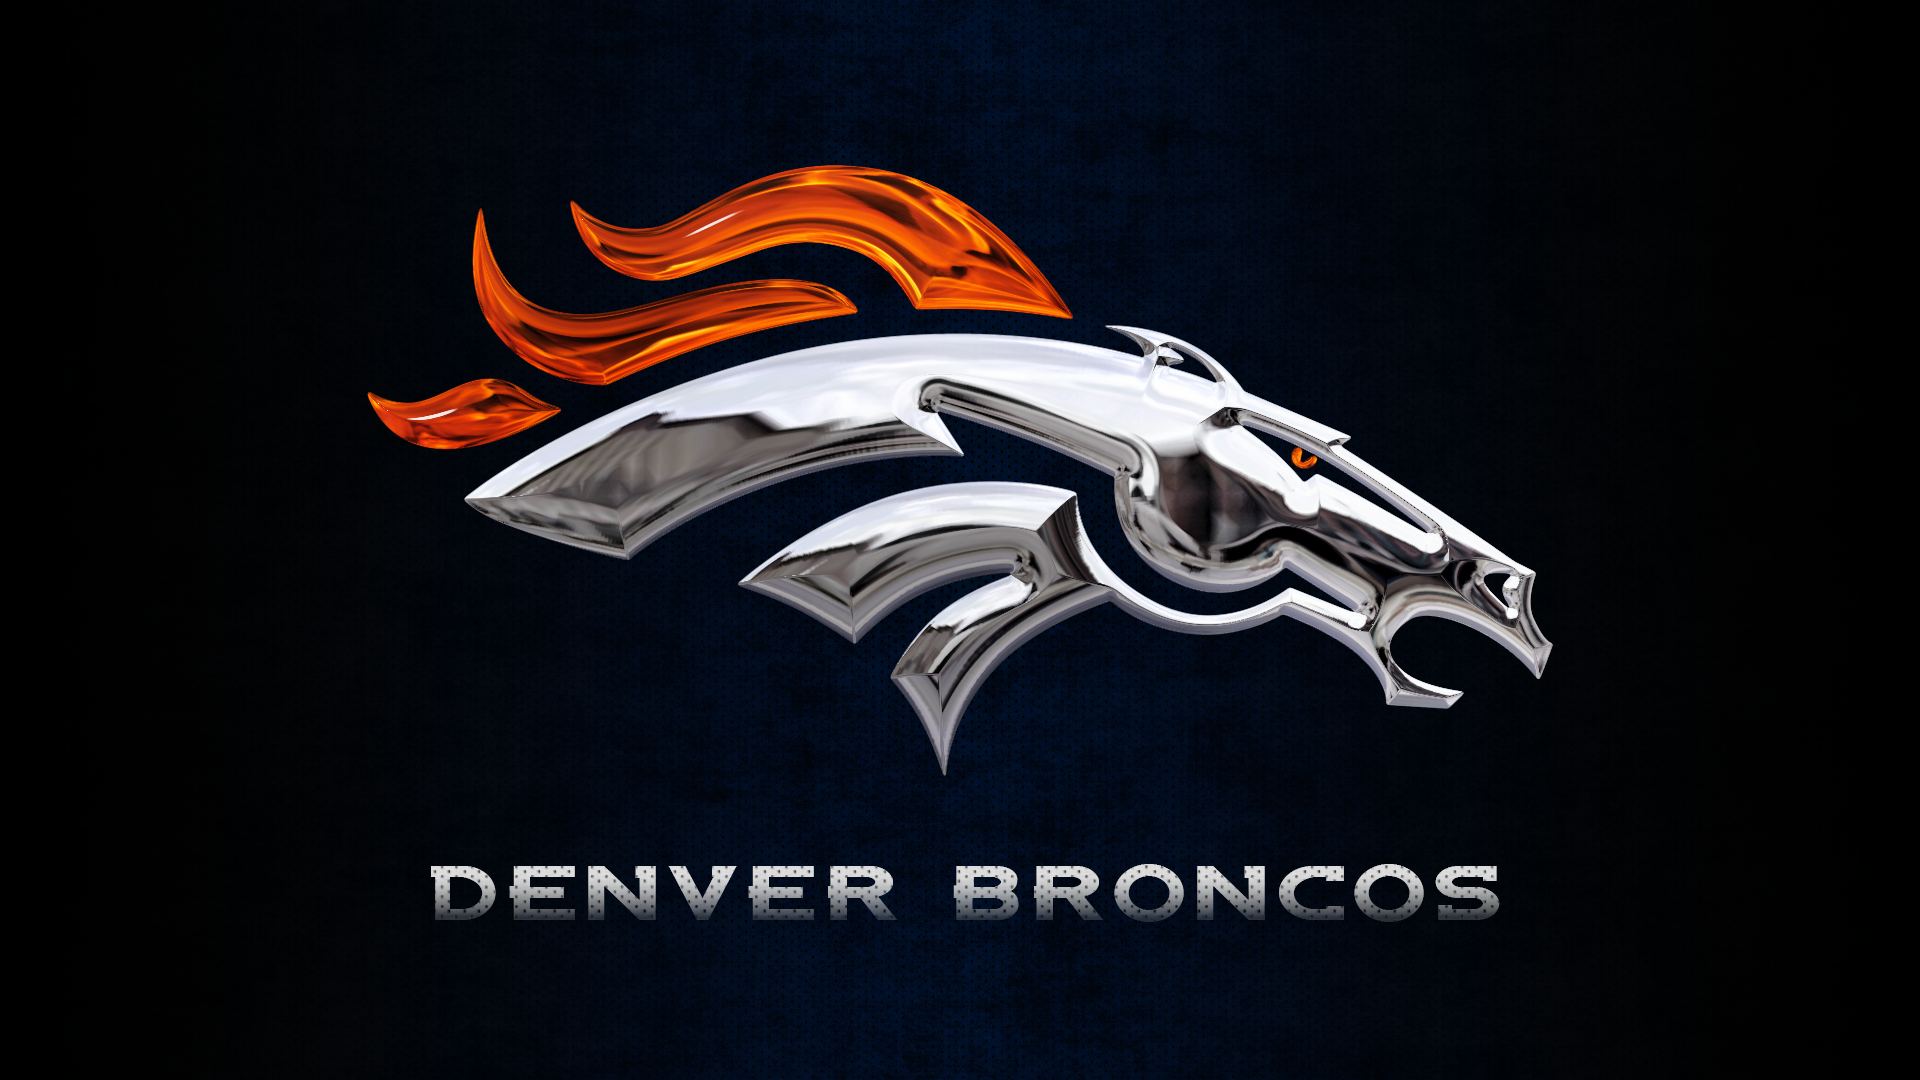 Denver Broncos wallpaper hd free download